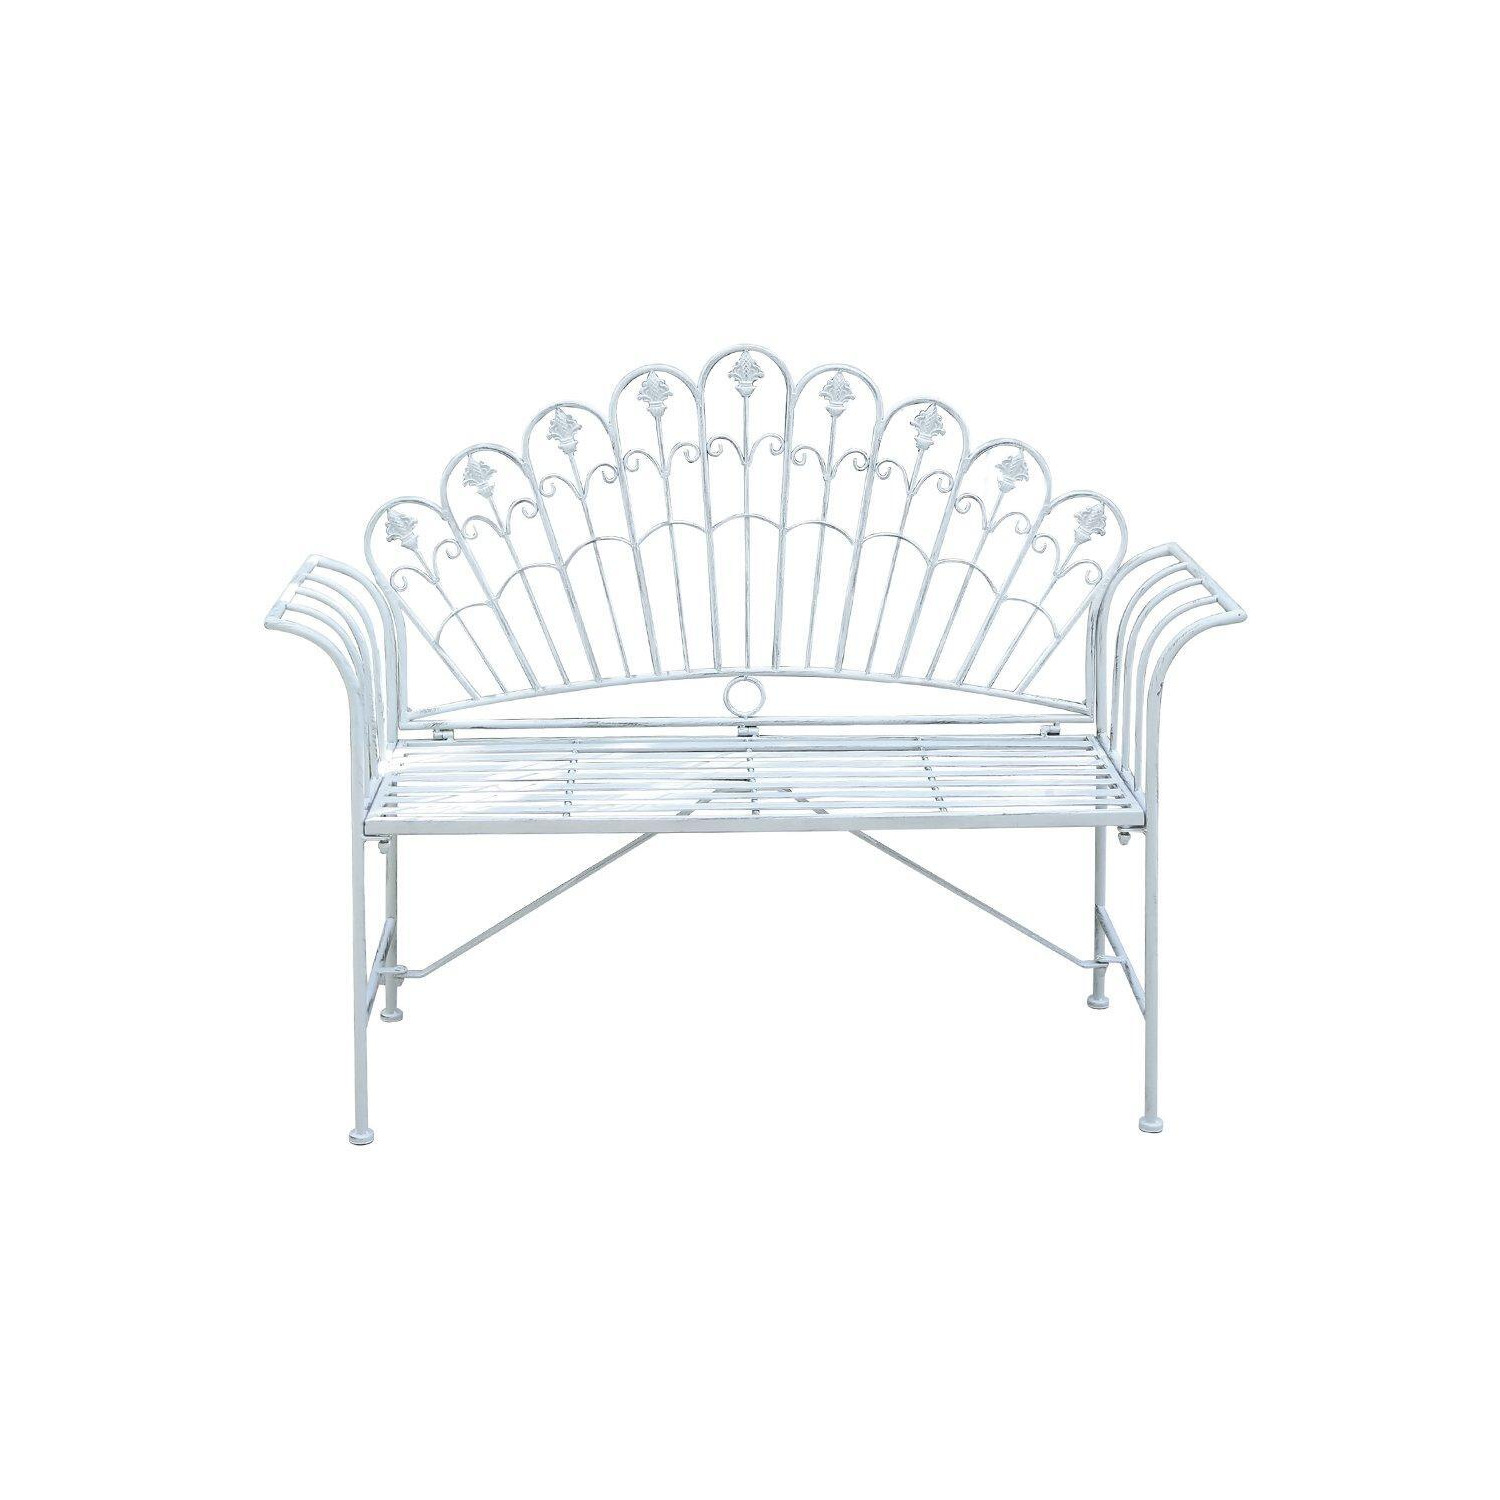 Metal Garden Bench Patio Furniture Seat Foldable Antique Grey - image 1